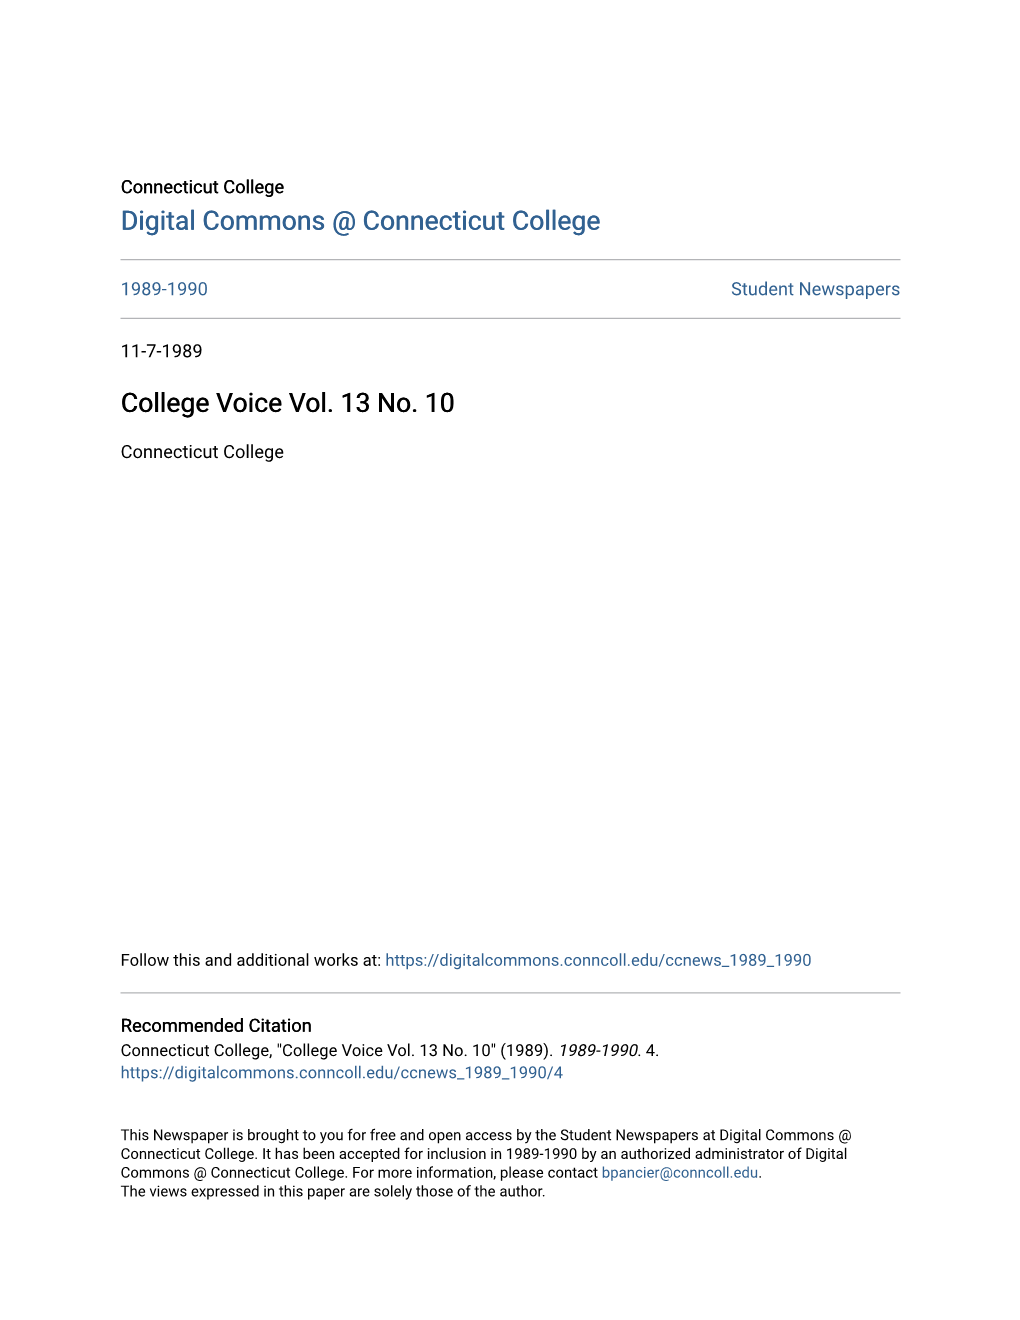 College Voice Vol. 13 No. 10